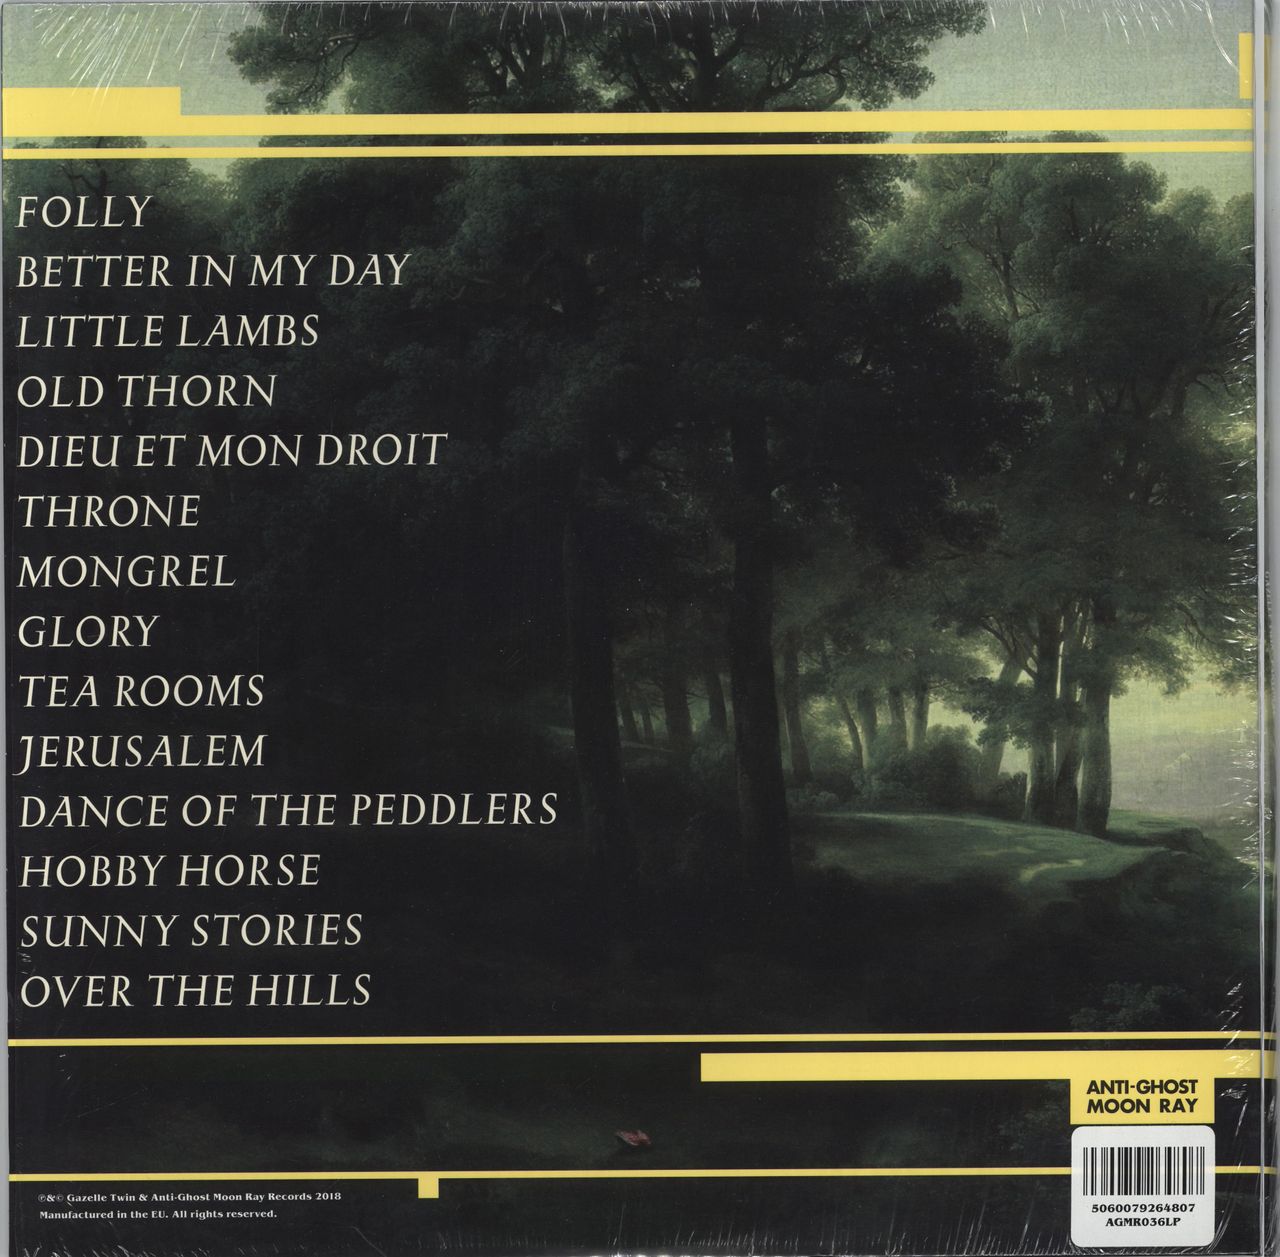 Gazelle Twin Pastoral - Red Vinyl UK vinyl LP album (LP record) 5060079264807